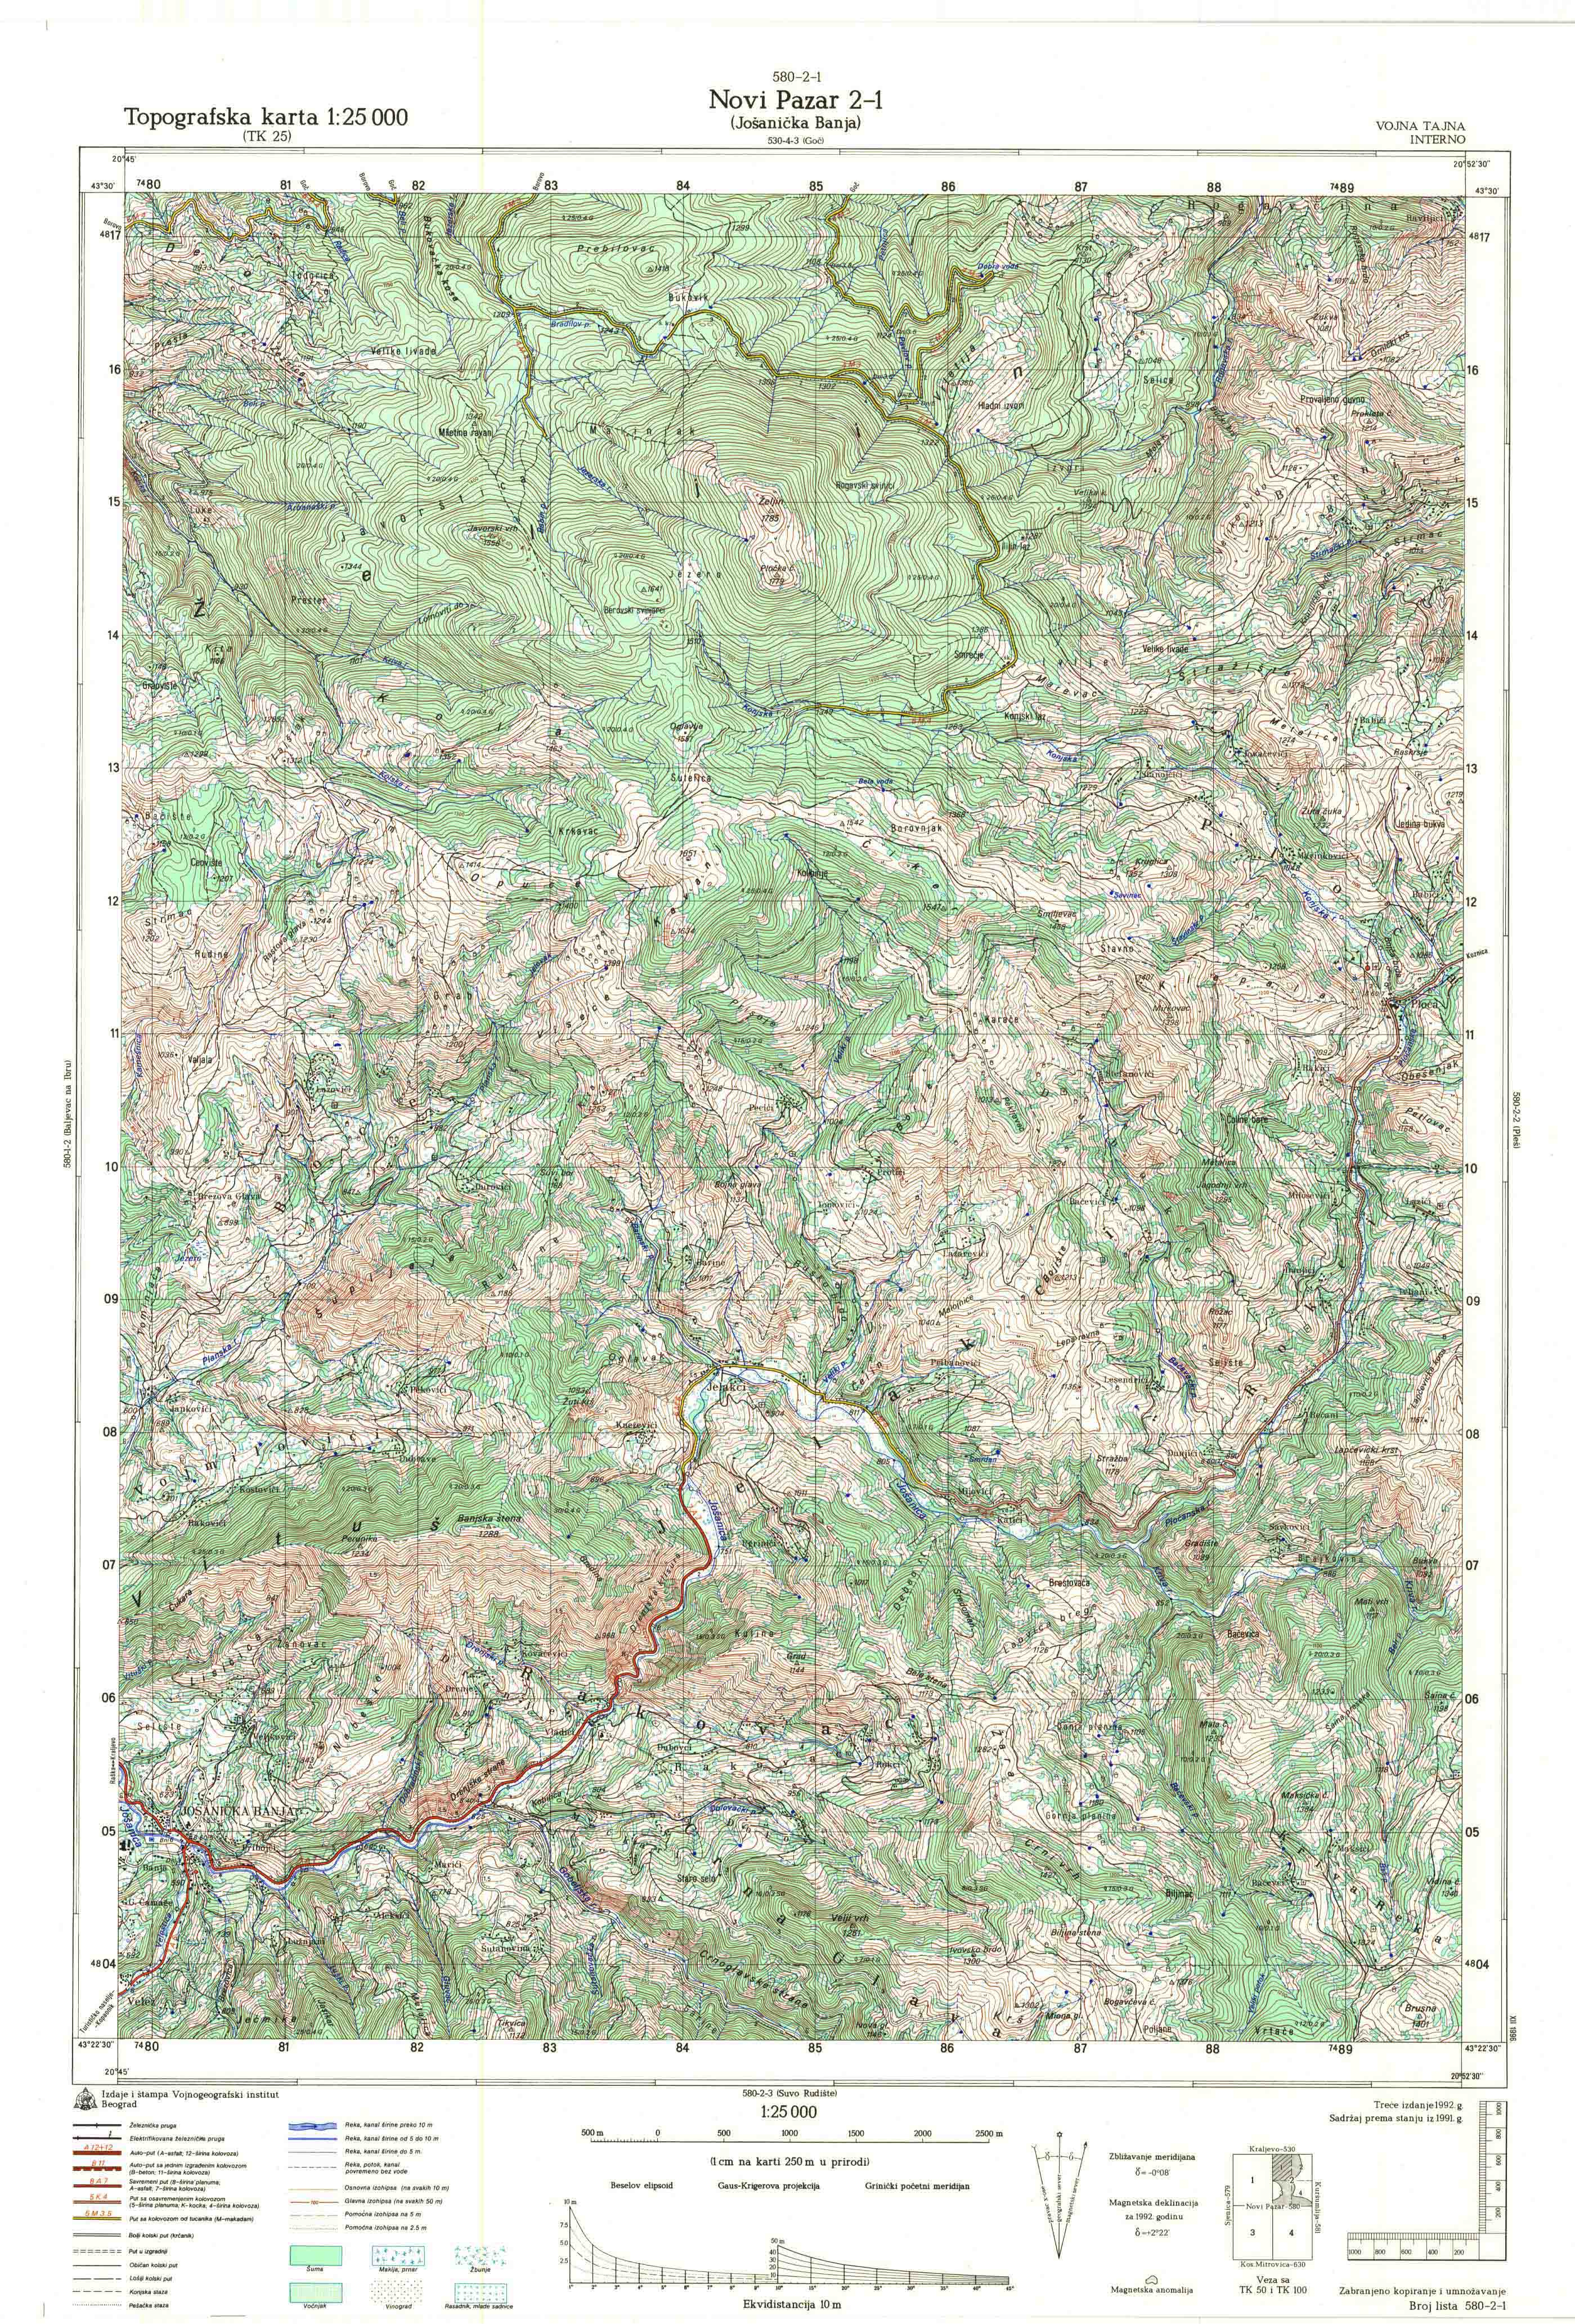  topografska karta srbije 25000 JNA  Novi Pazar